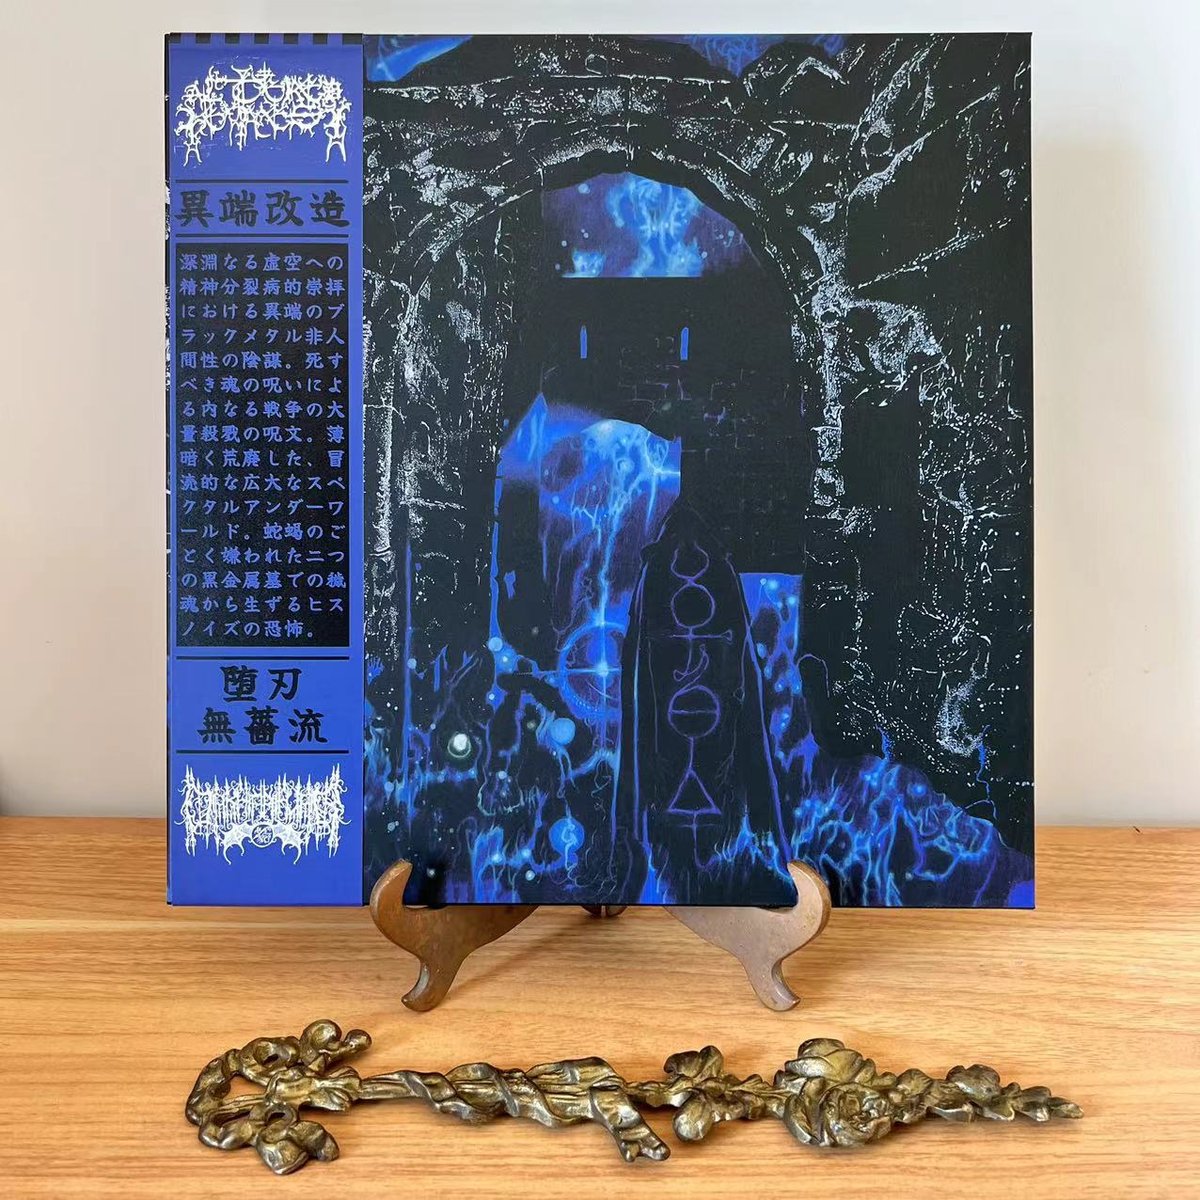 WAXGOAT307 Altered Heresy/Dakhanavar (Bel/USA) - Split - LP